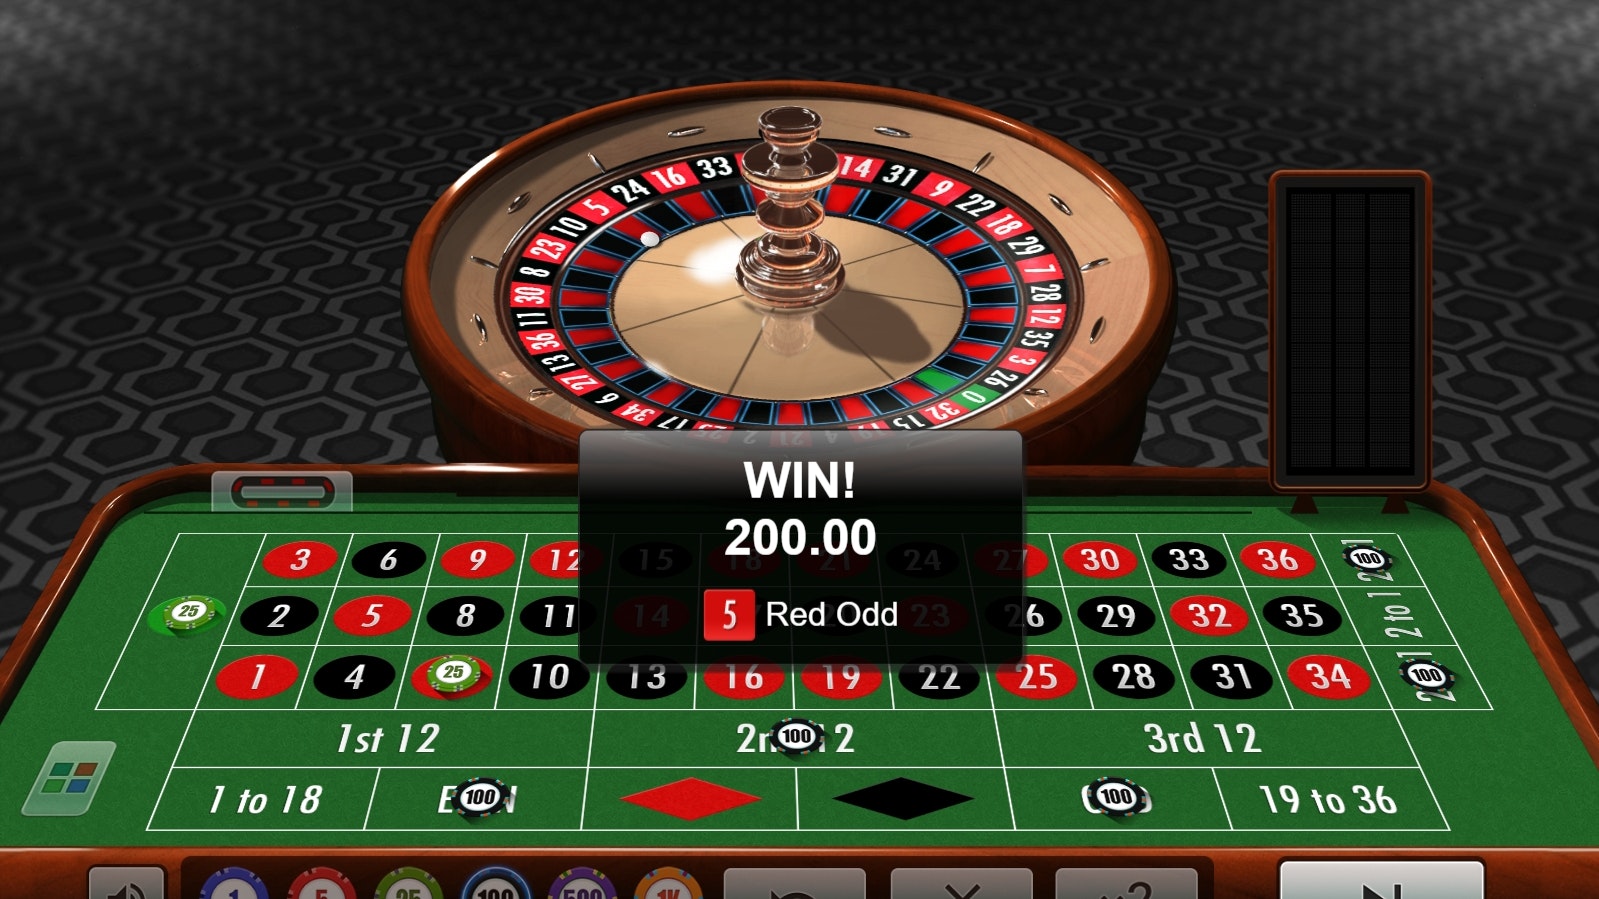 Casino you can play different slots online blackjack roulette video игровой автомат бутафория